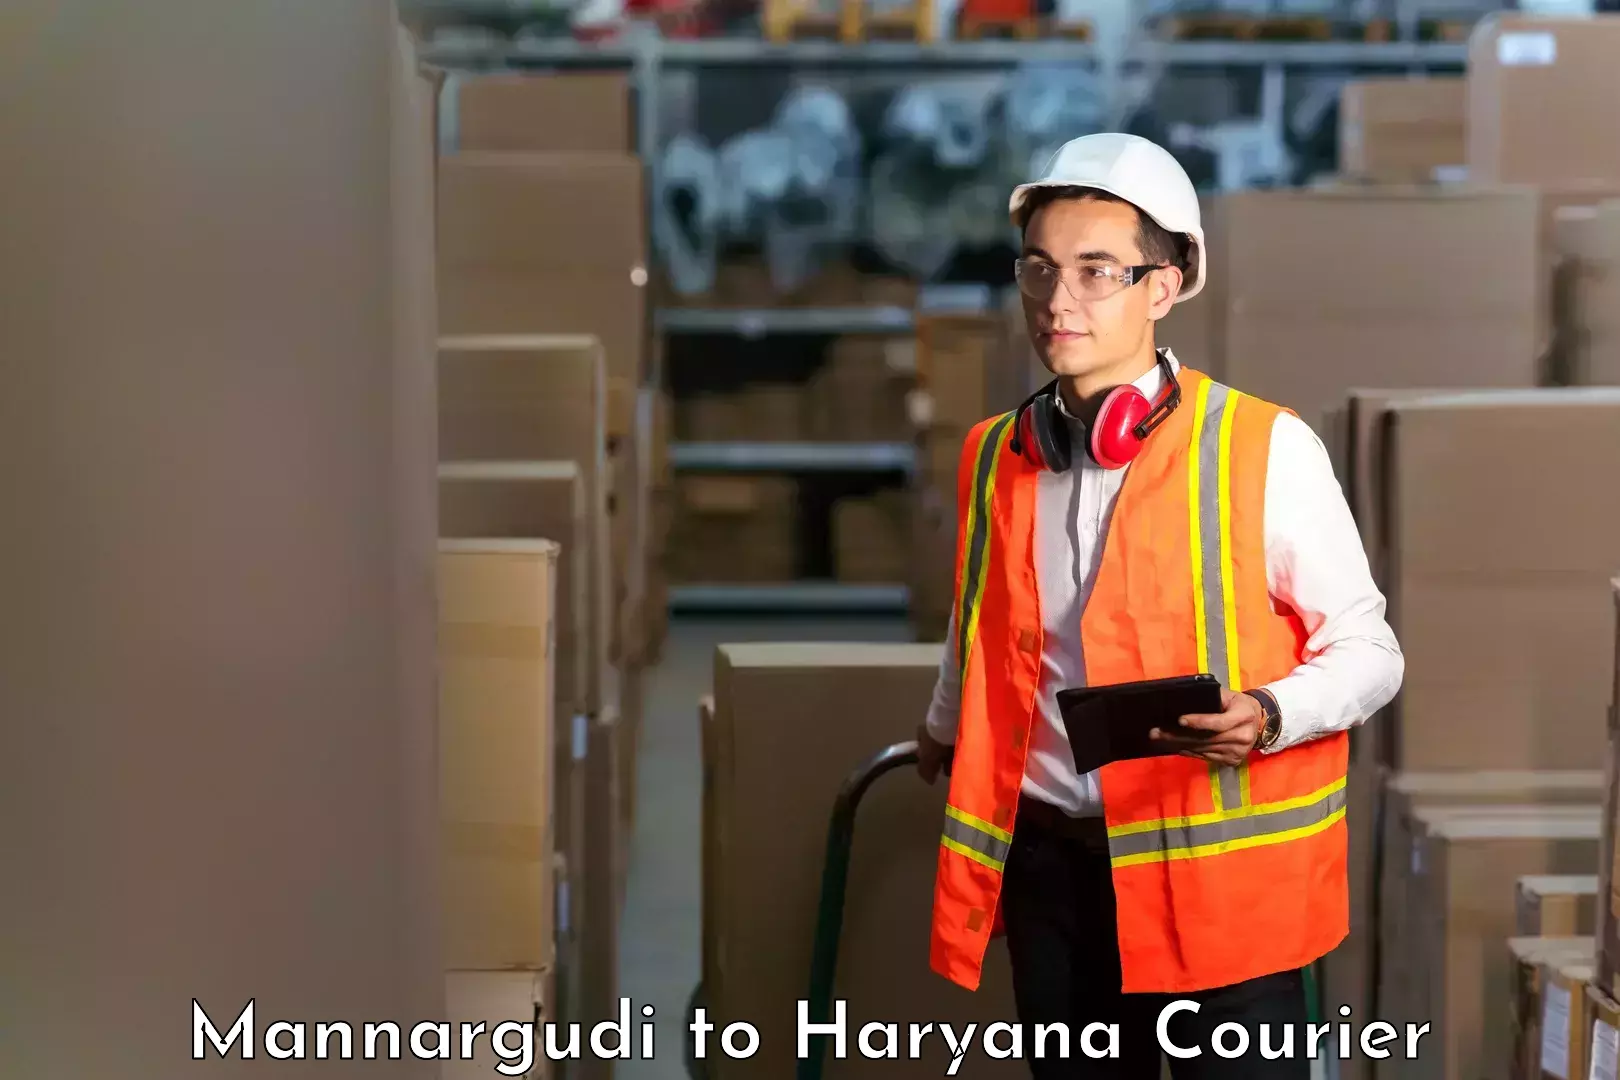 Customer-focused courier Mannargudi to Siwani